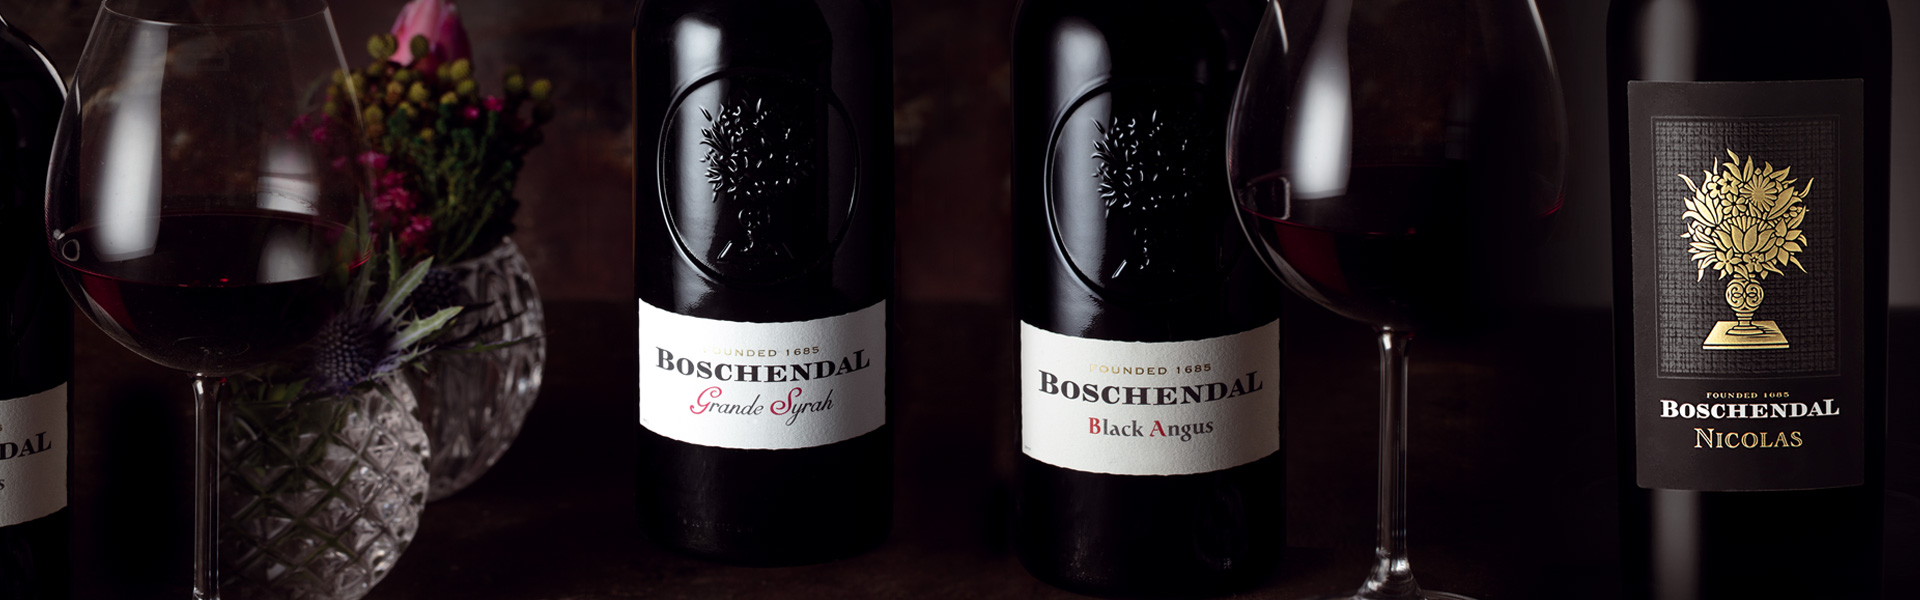 98-Zuid-Afrikaanse-icoonwijnen-van-Boschendal-blogbanner-z-tekst.jpg